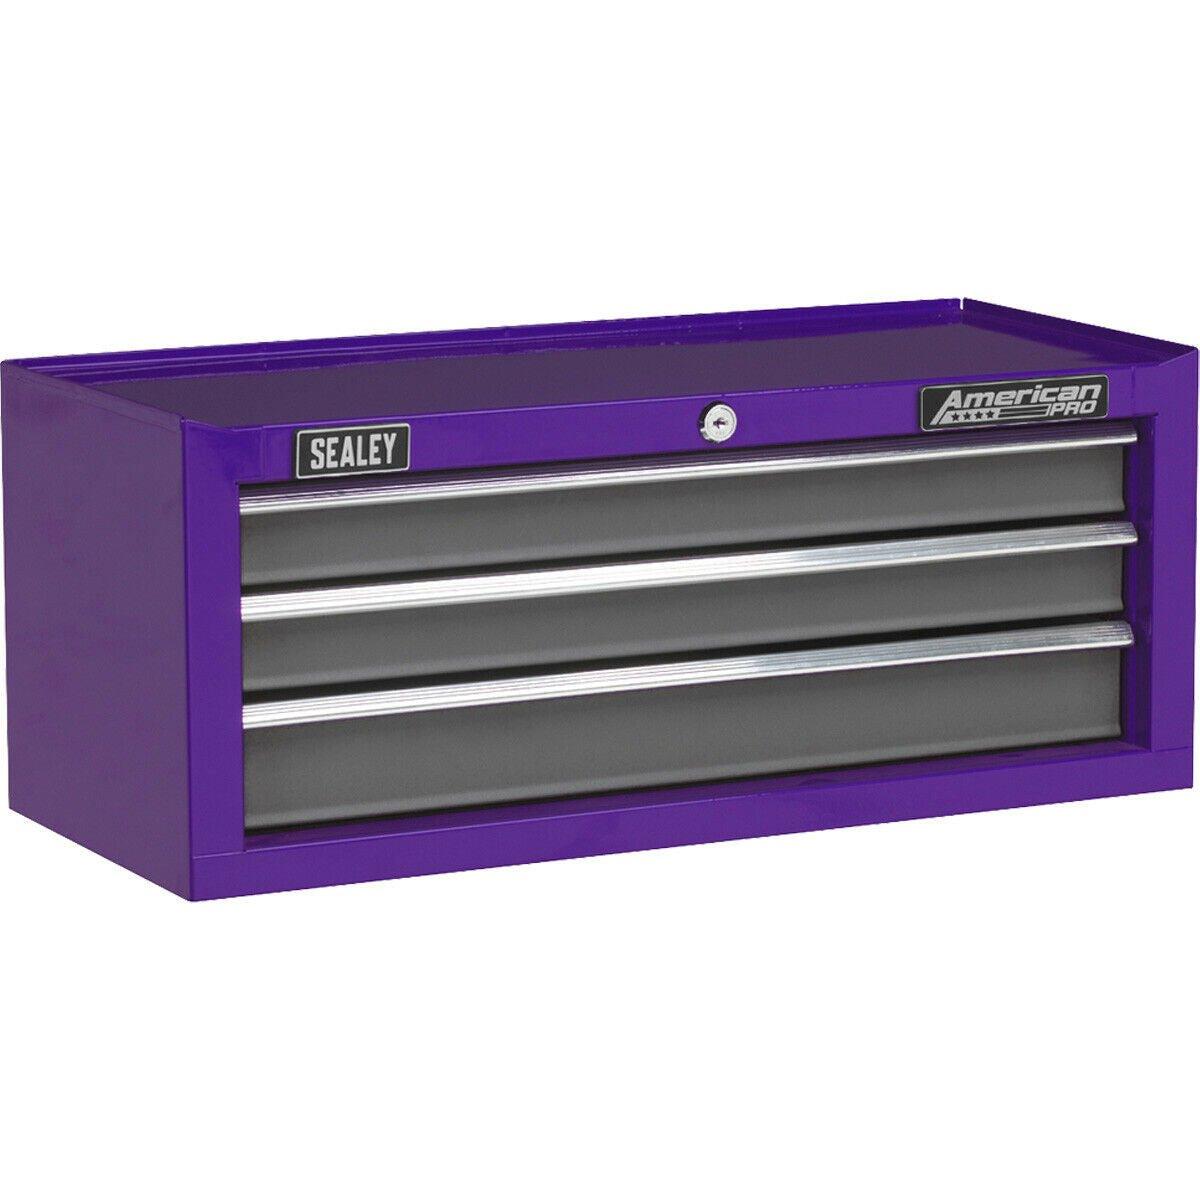 605 x 260 x 250mm PURPLE 3 Drawer MID-BOX Tool Chest Lockable Storage Cabinet